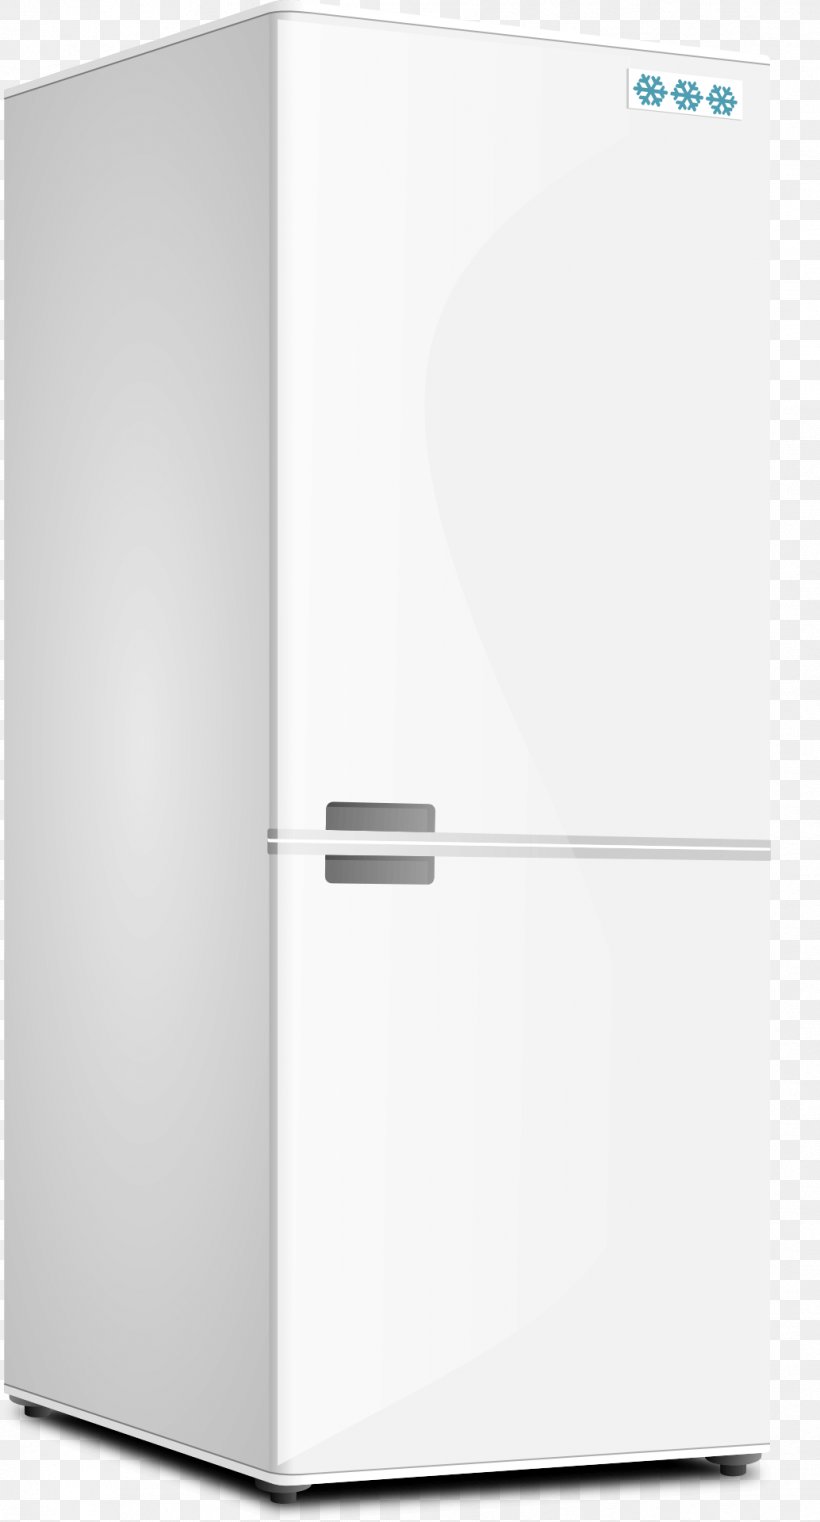 Refrigerator Home Appliance Freezers Dishwasher Washing Machines, PNG, 1034x1920px, Refrigerator, Air Conditioner, Air Conditioning, Clothes Dryer, Dishwasher Download Free